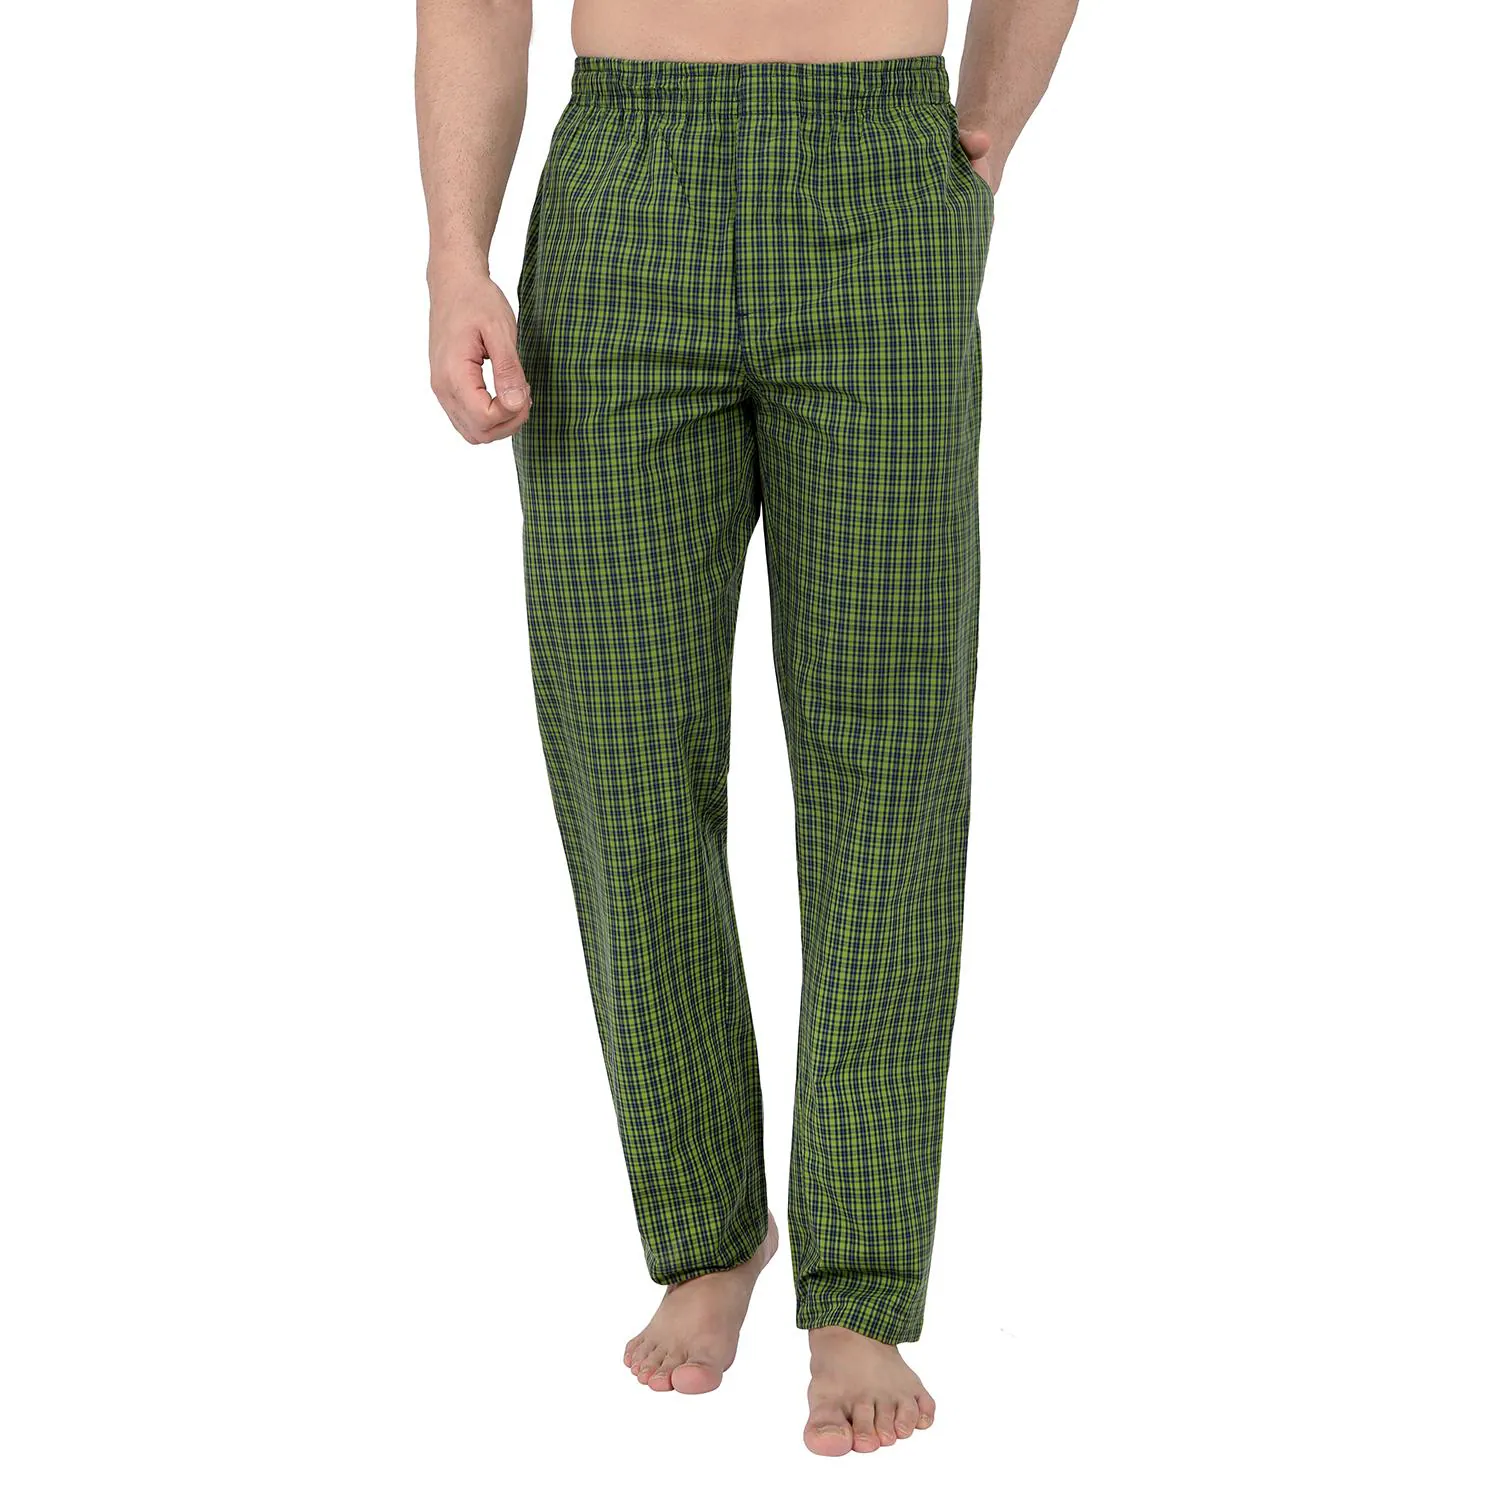 Bintangor Men's Sleep Pajama Pants 100% Cotton Knit Elastic Waistband Lounge Wear Long 